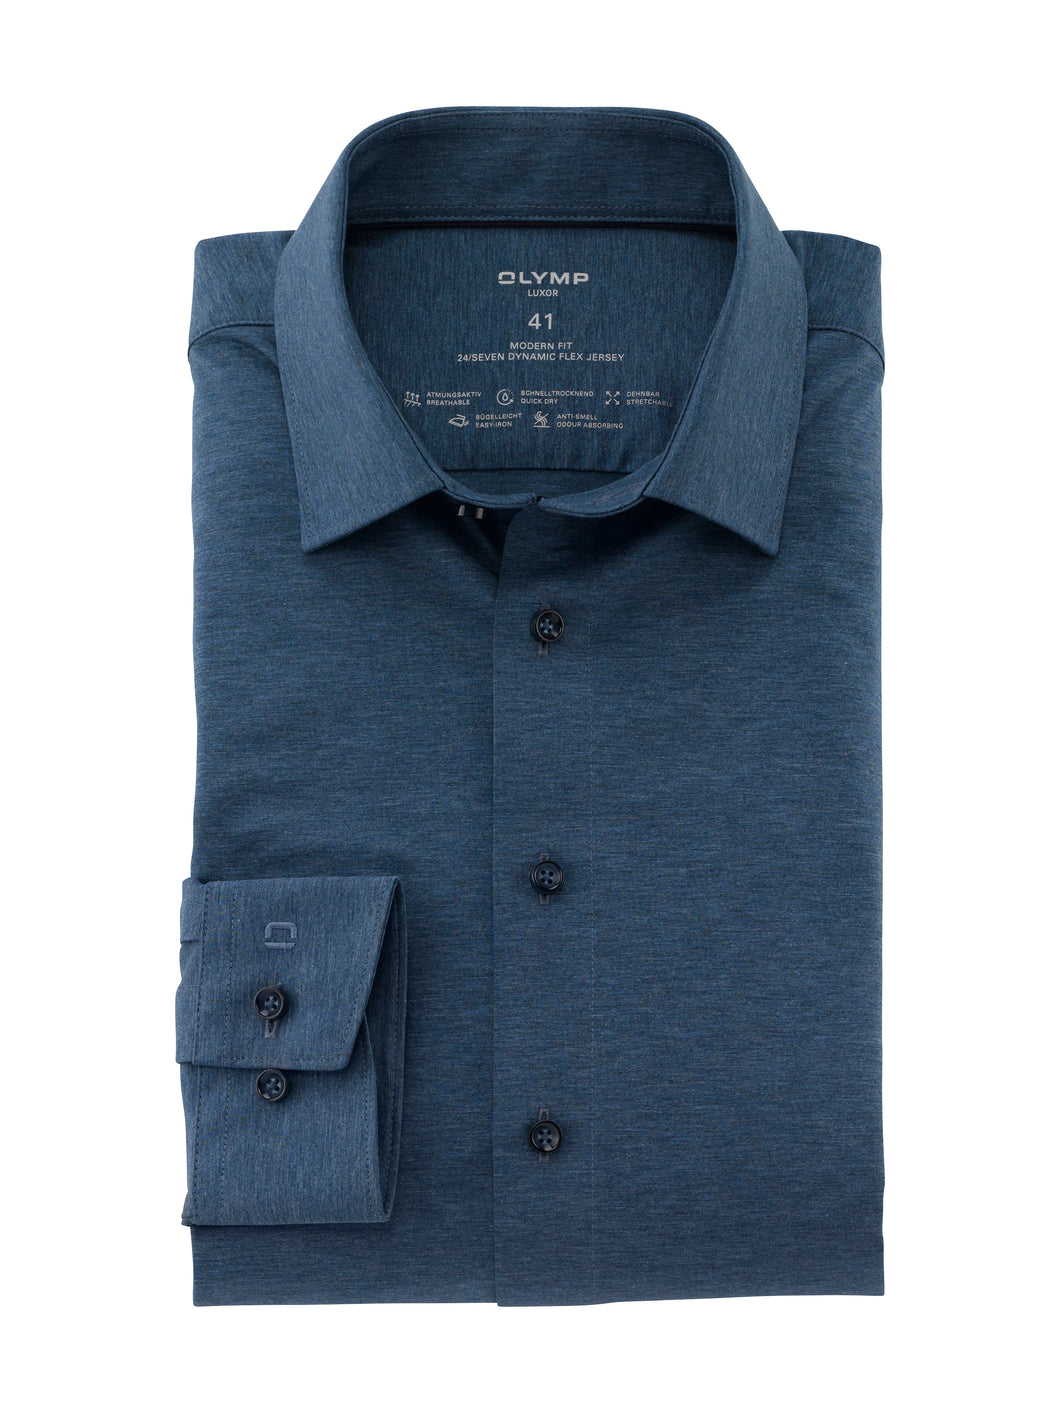 OLYMP Luxor 24-Seven Modern Fit Dynamic Flex Jersey Shirt Blue Melange